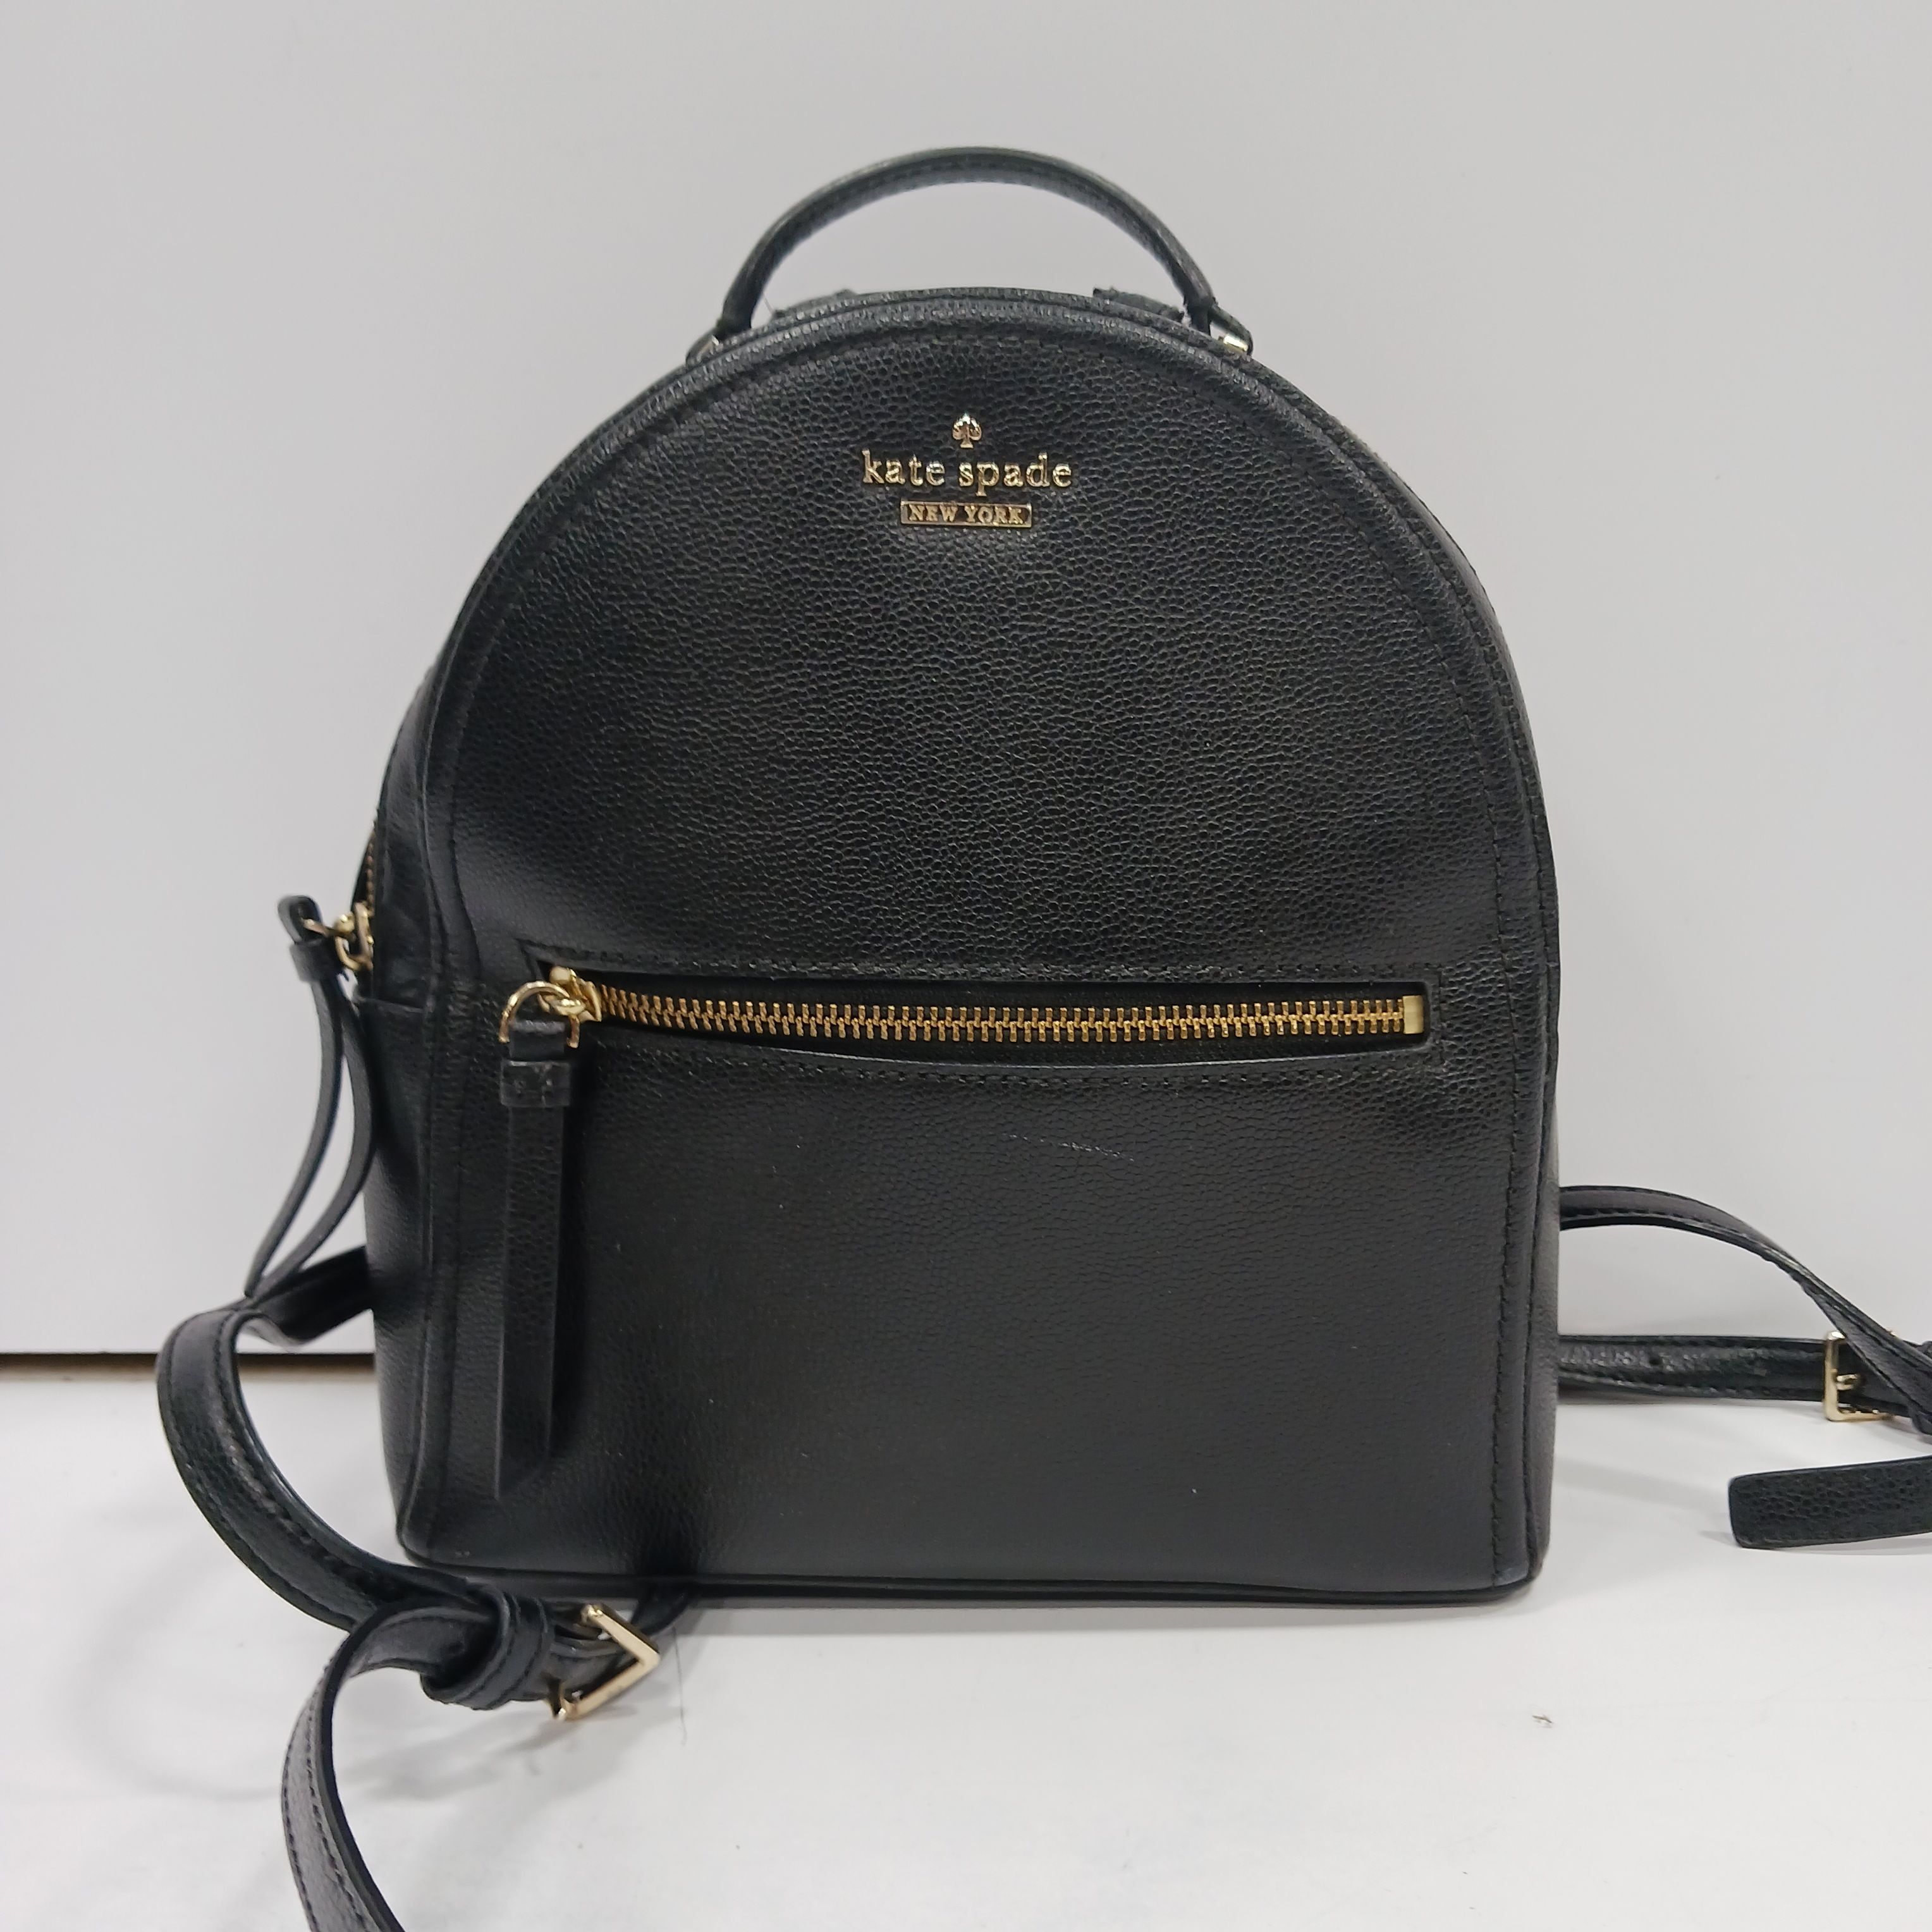 Buy Kate Spade Chester Allyn Street Tassel Small Handbag Black by Kate Spade  New York at Amazon.in